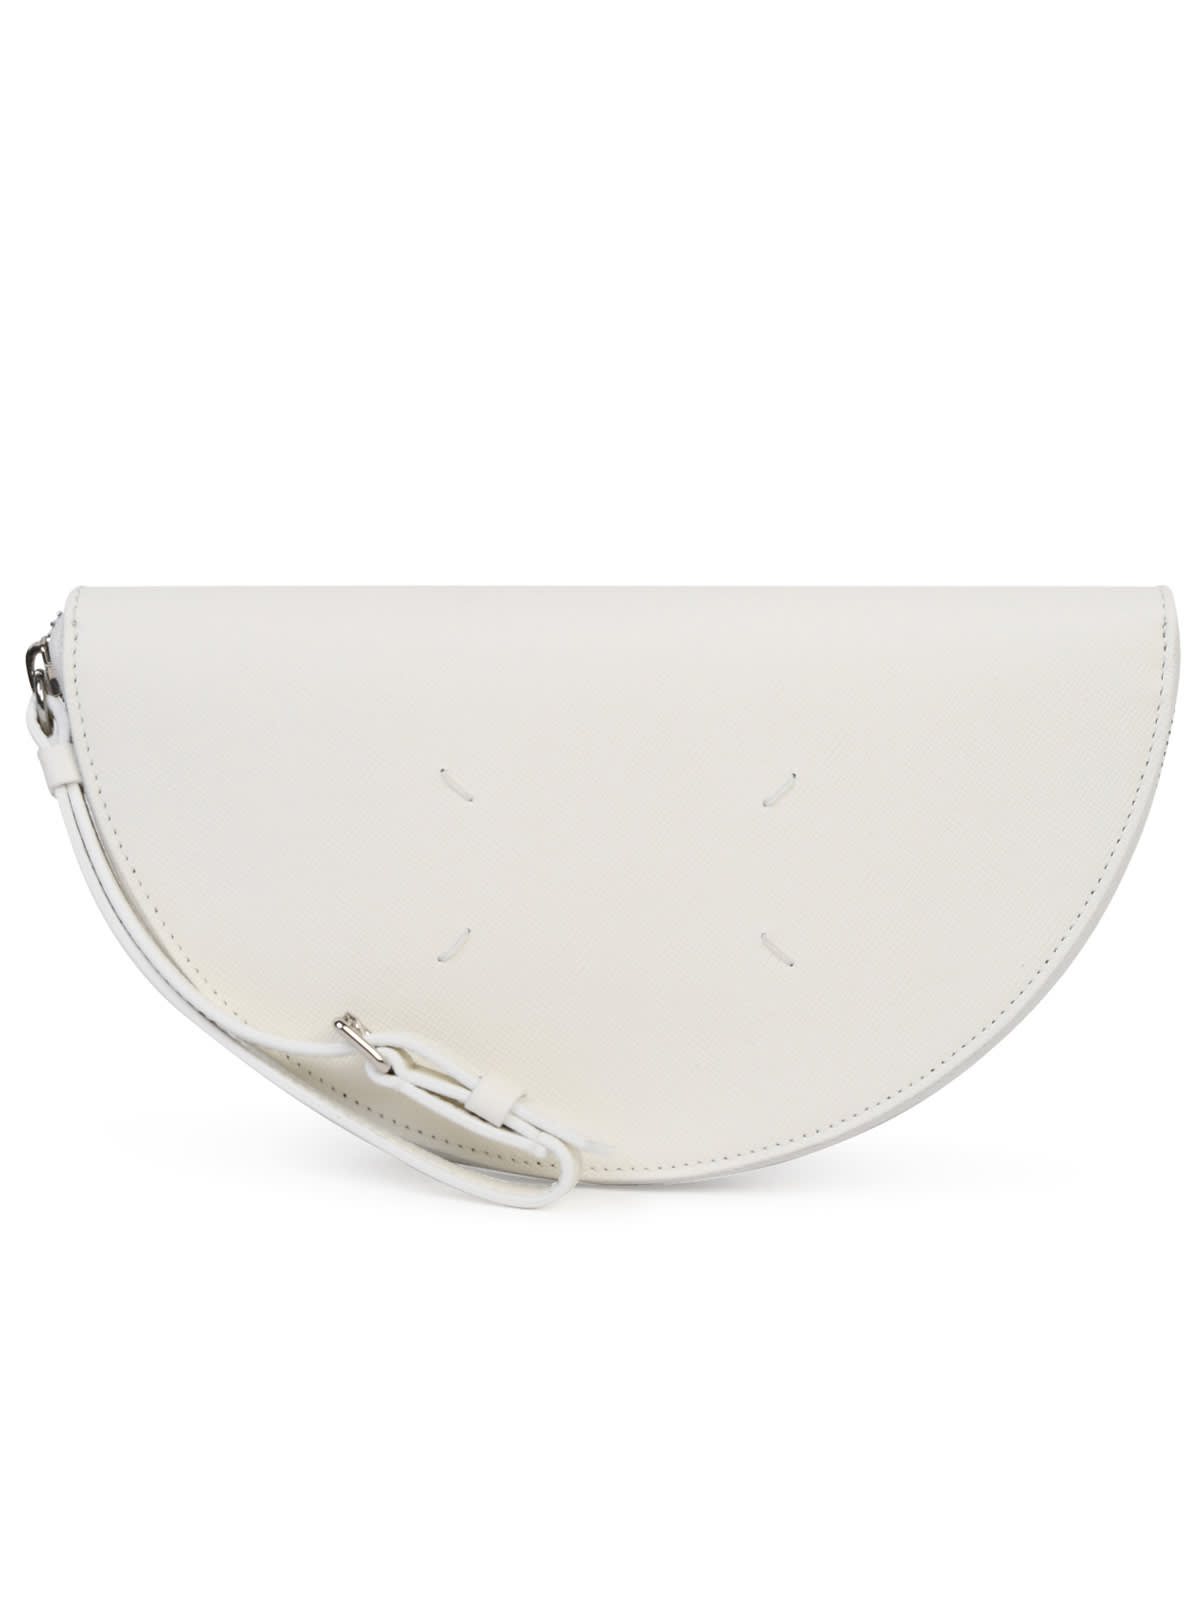 White Saffiano Leather Clutch Bag